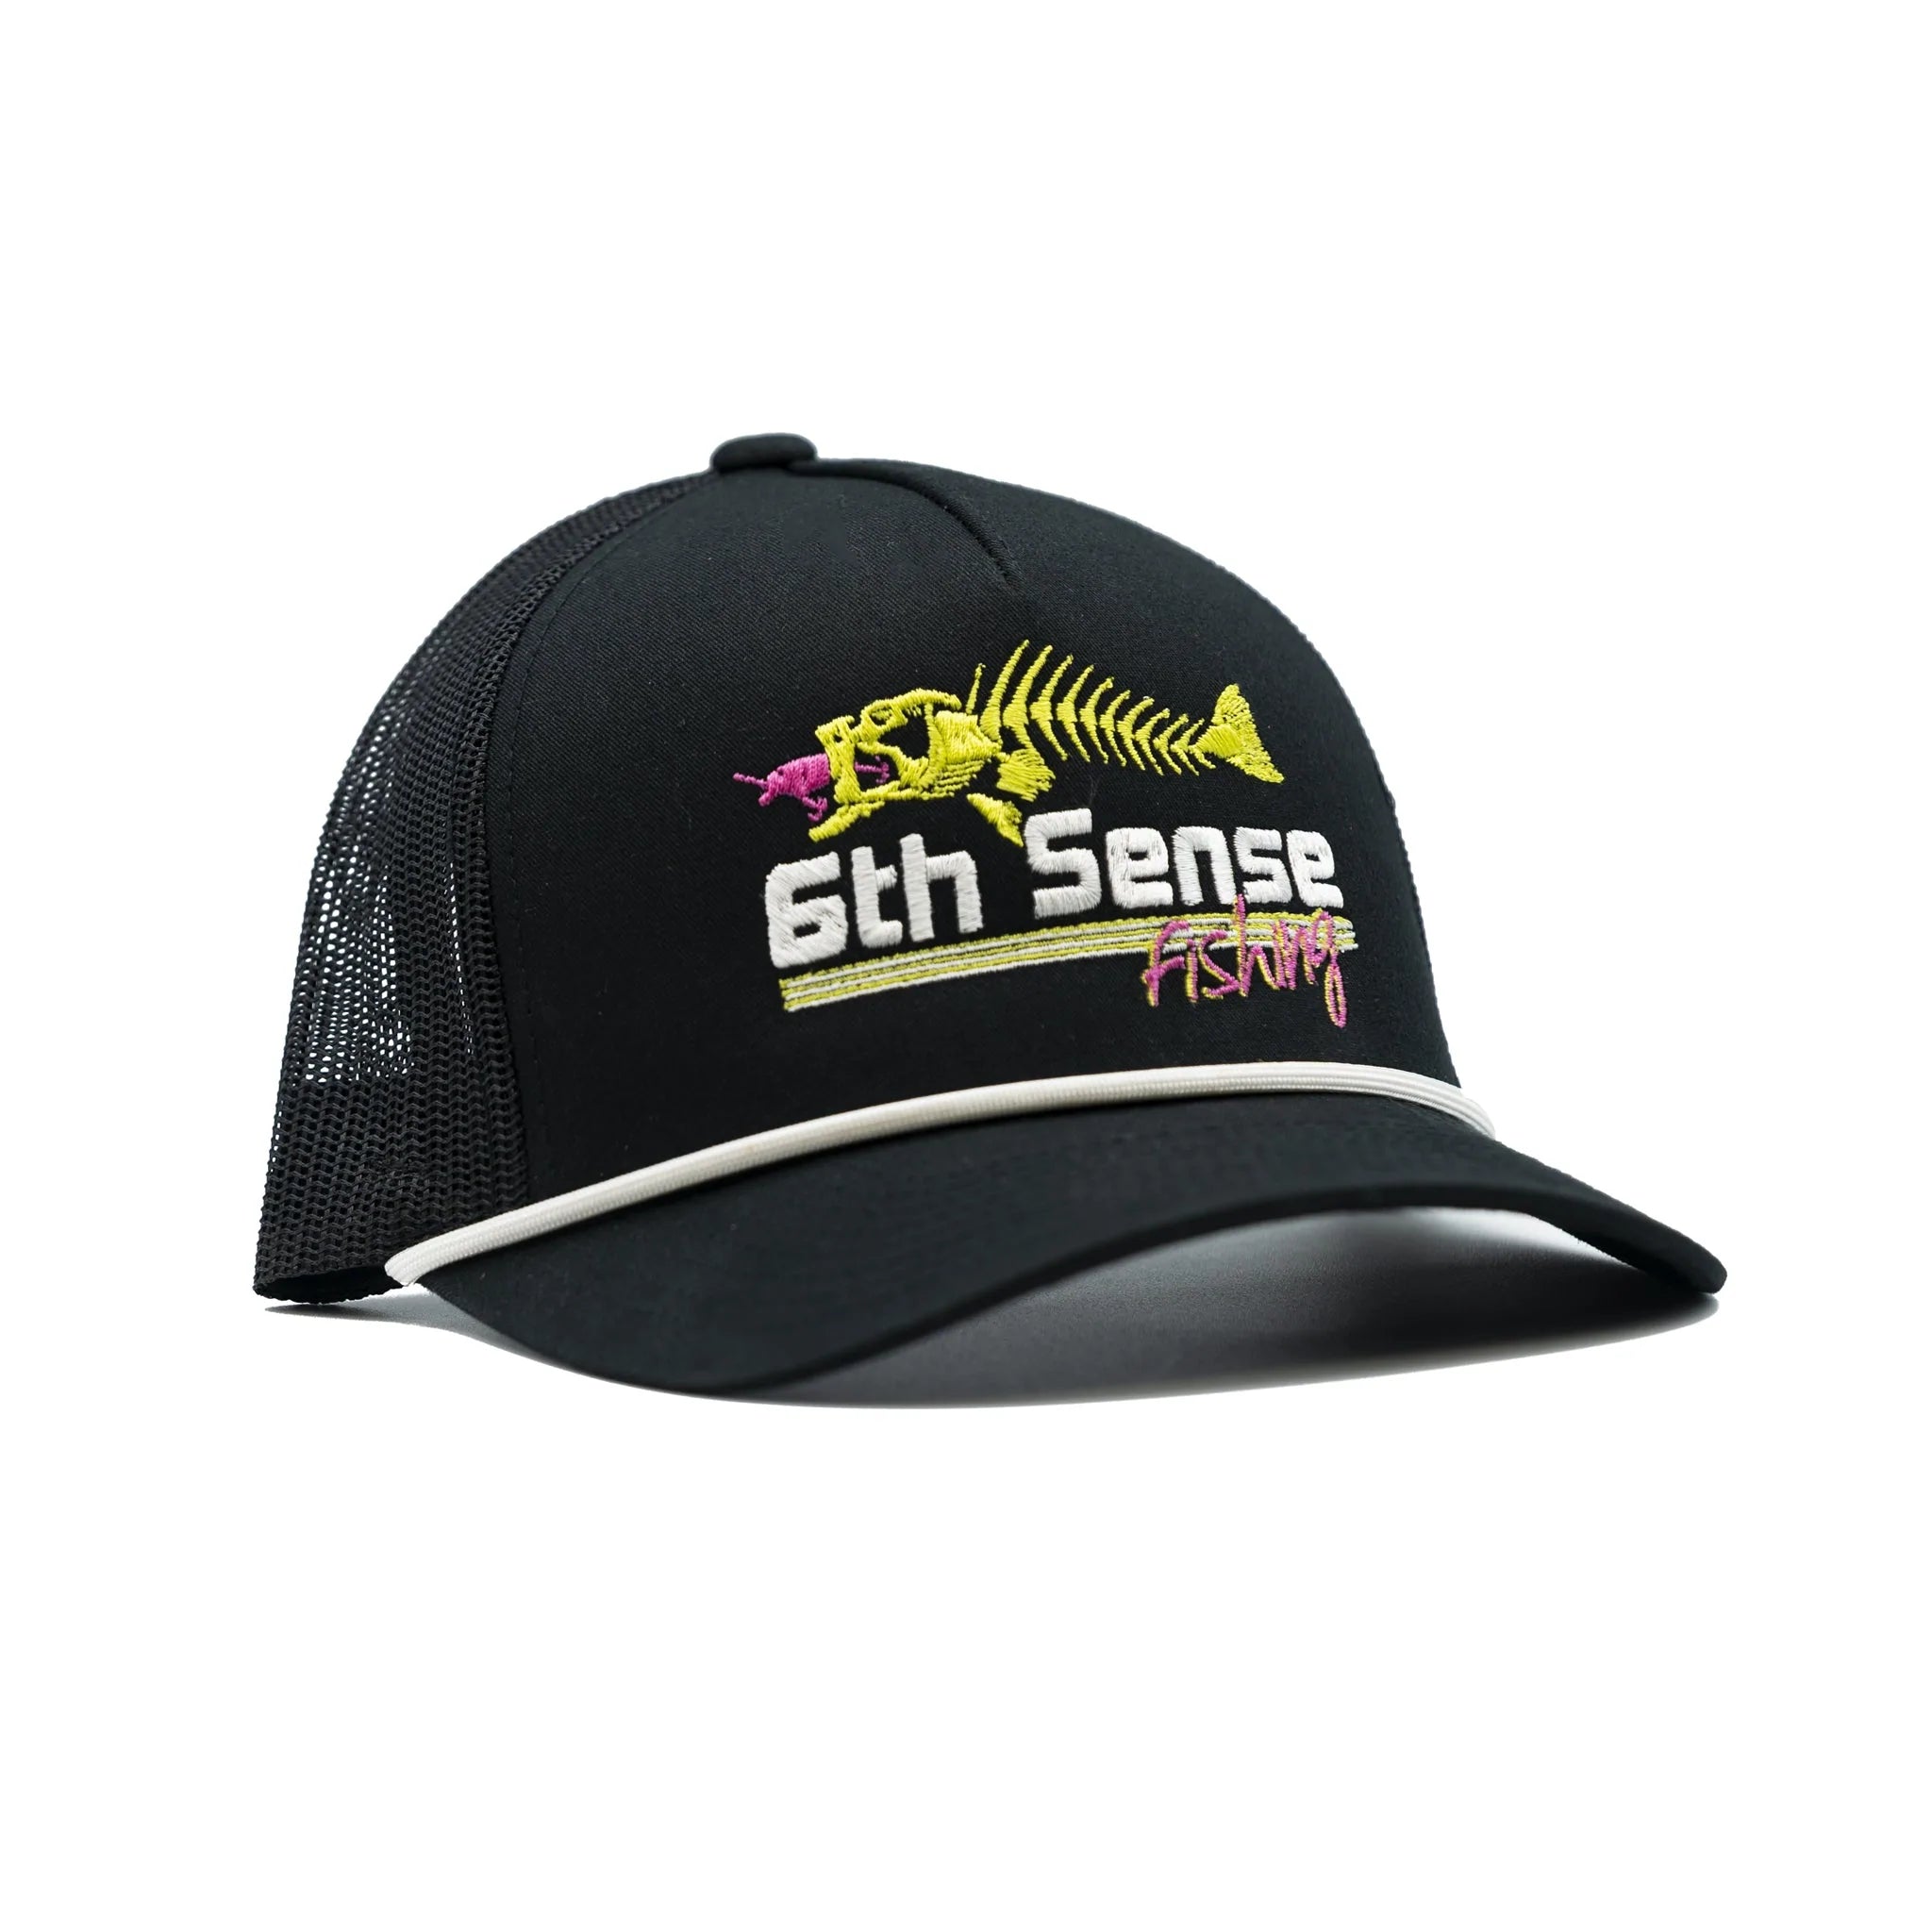 6th Sense Jigged Out Hat